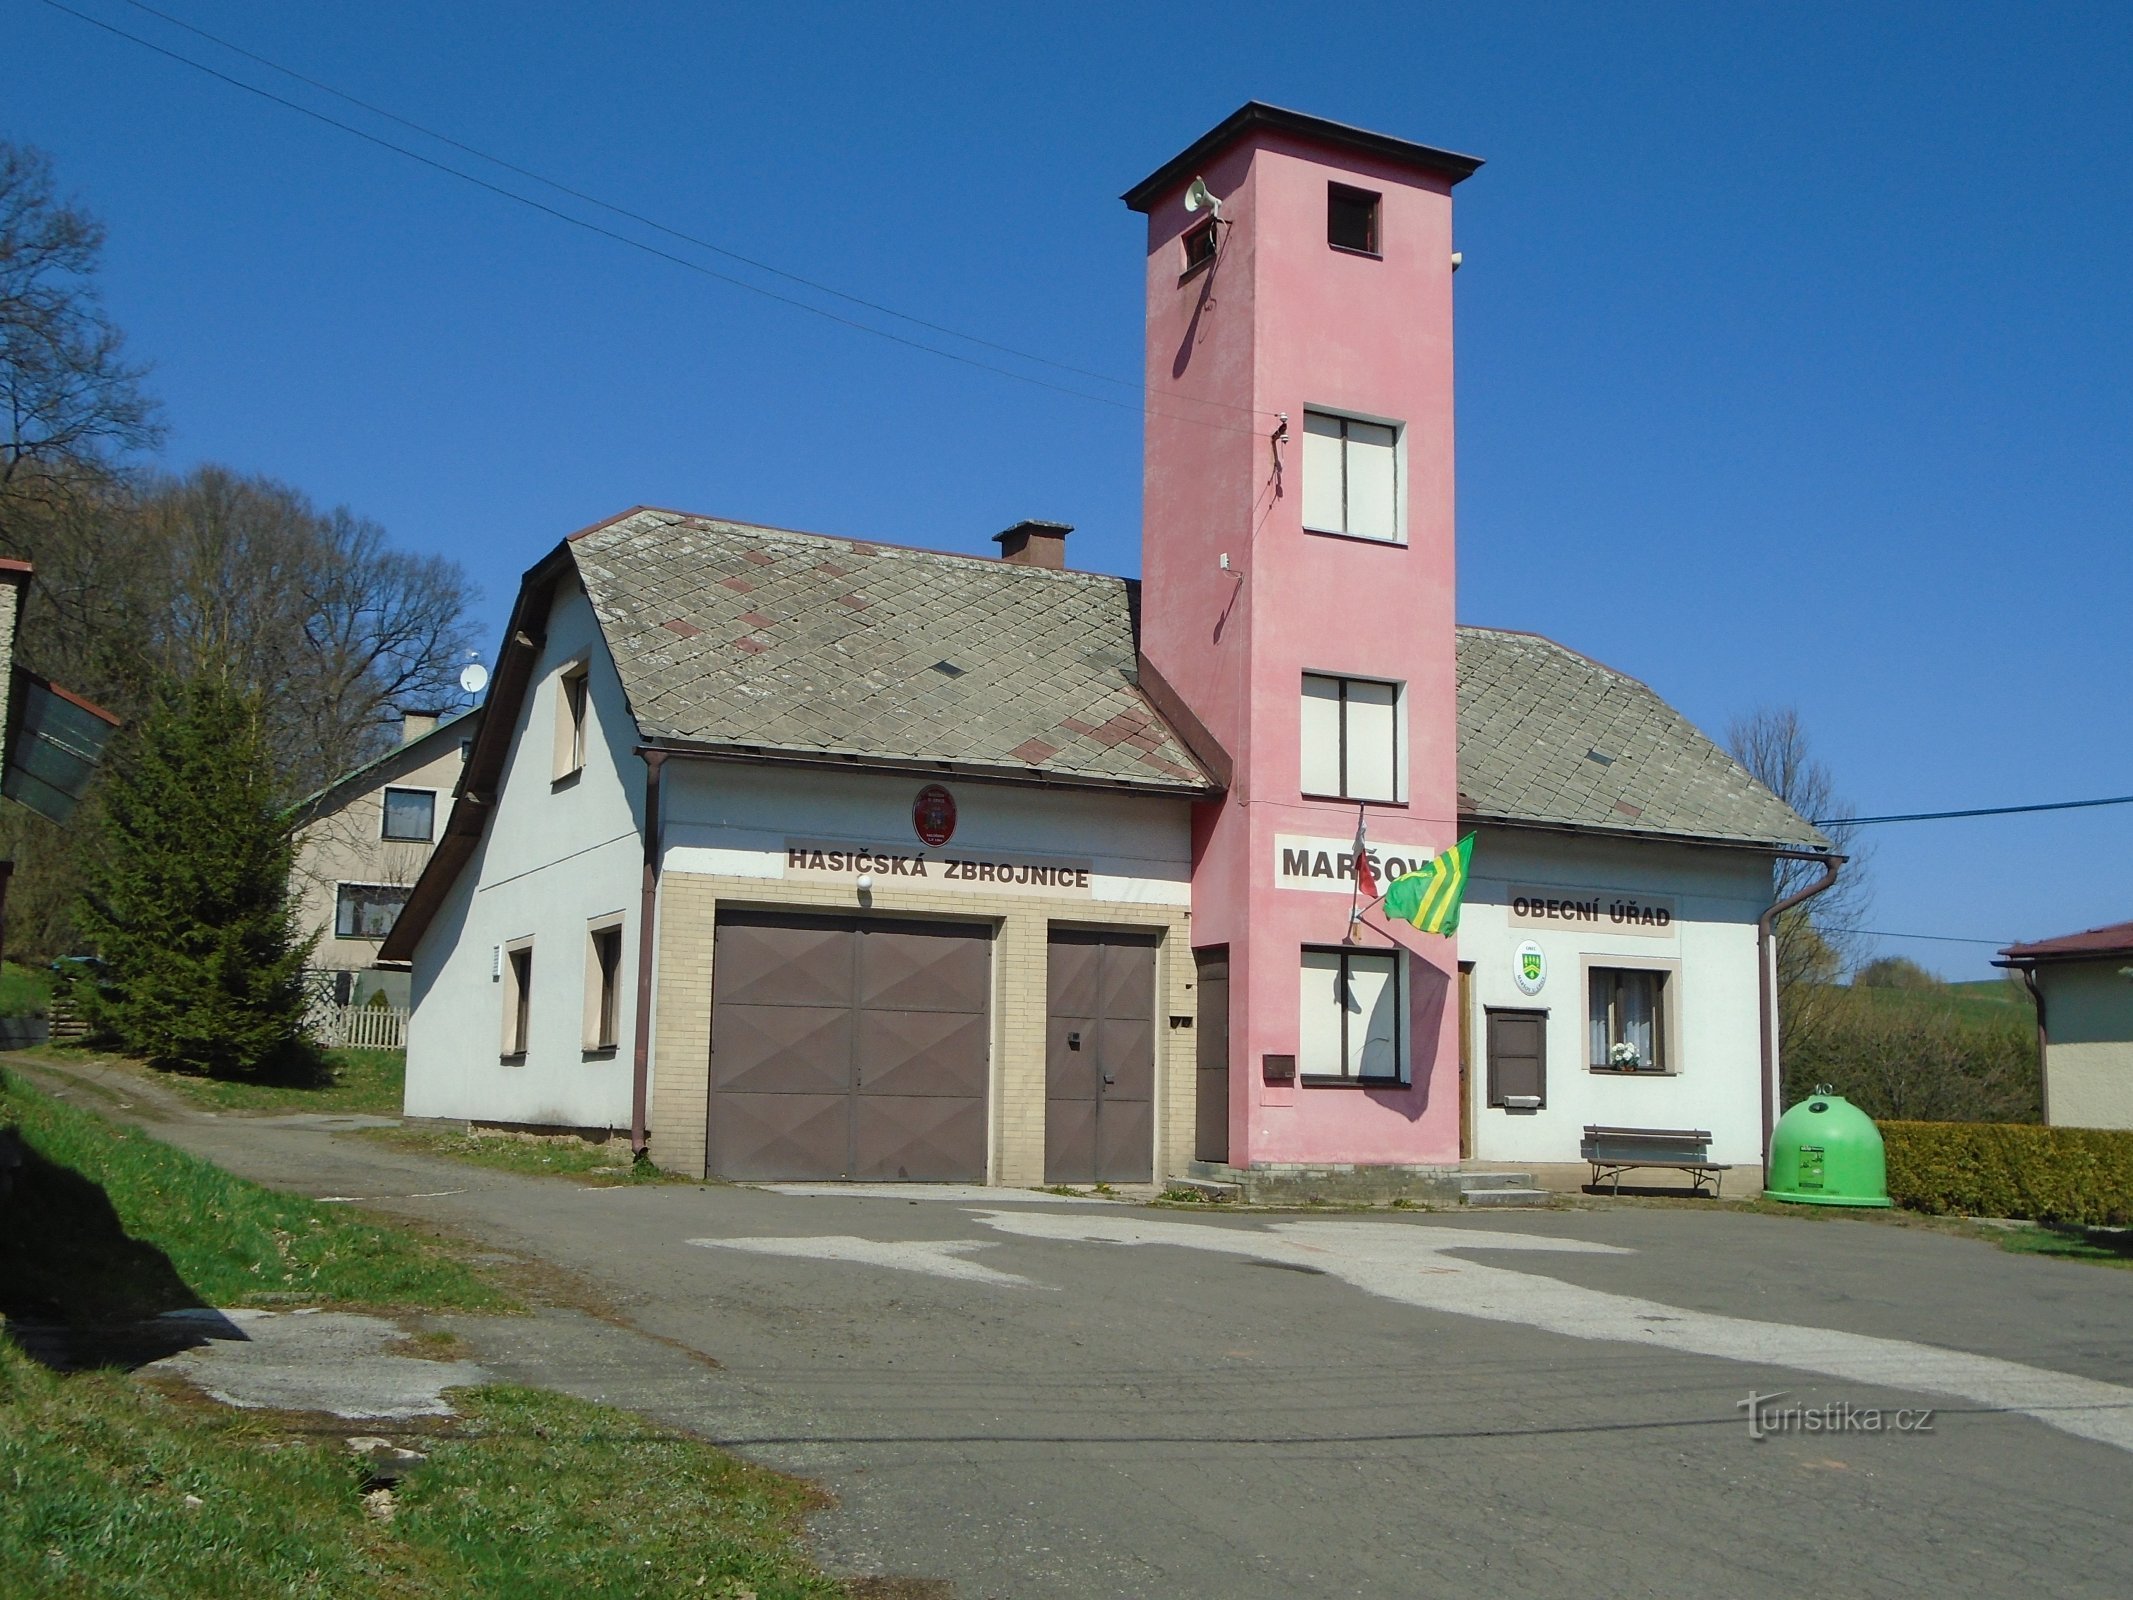 Oficina municipal (Maršov u Úpice)